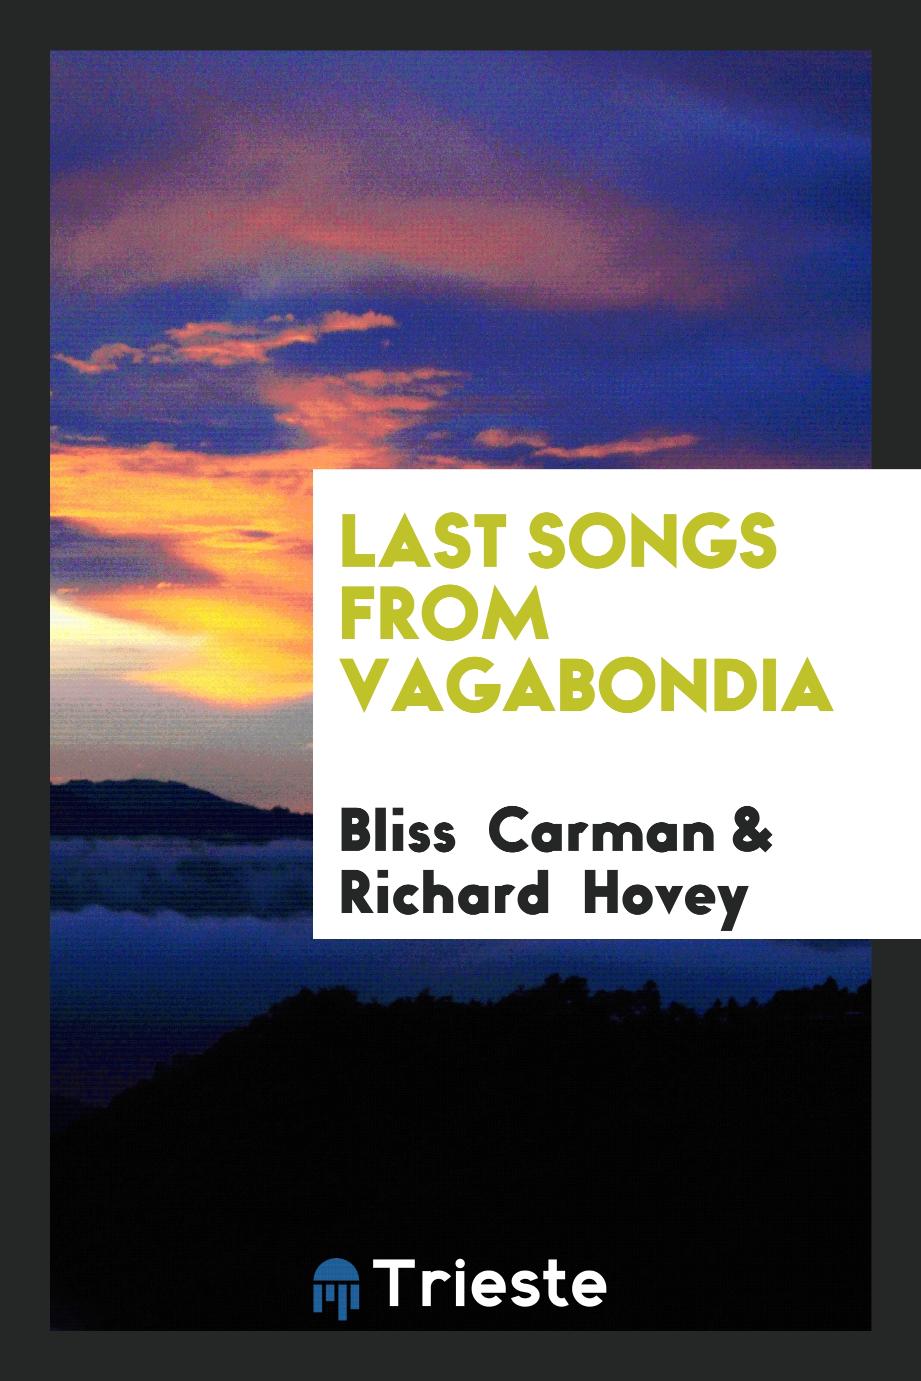 Last Songs from Vagabondia